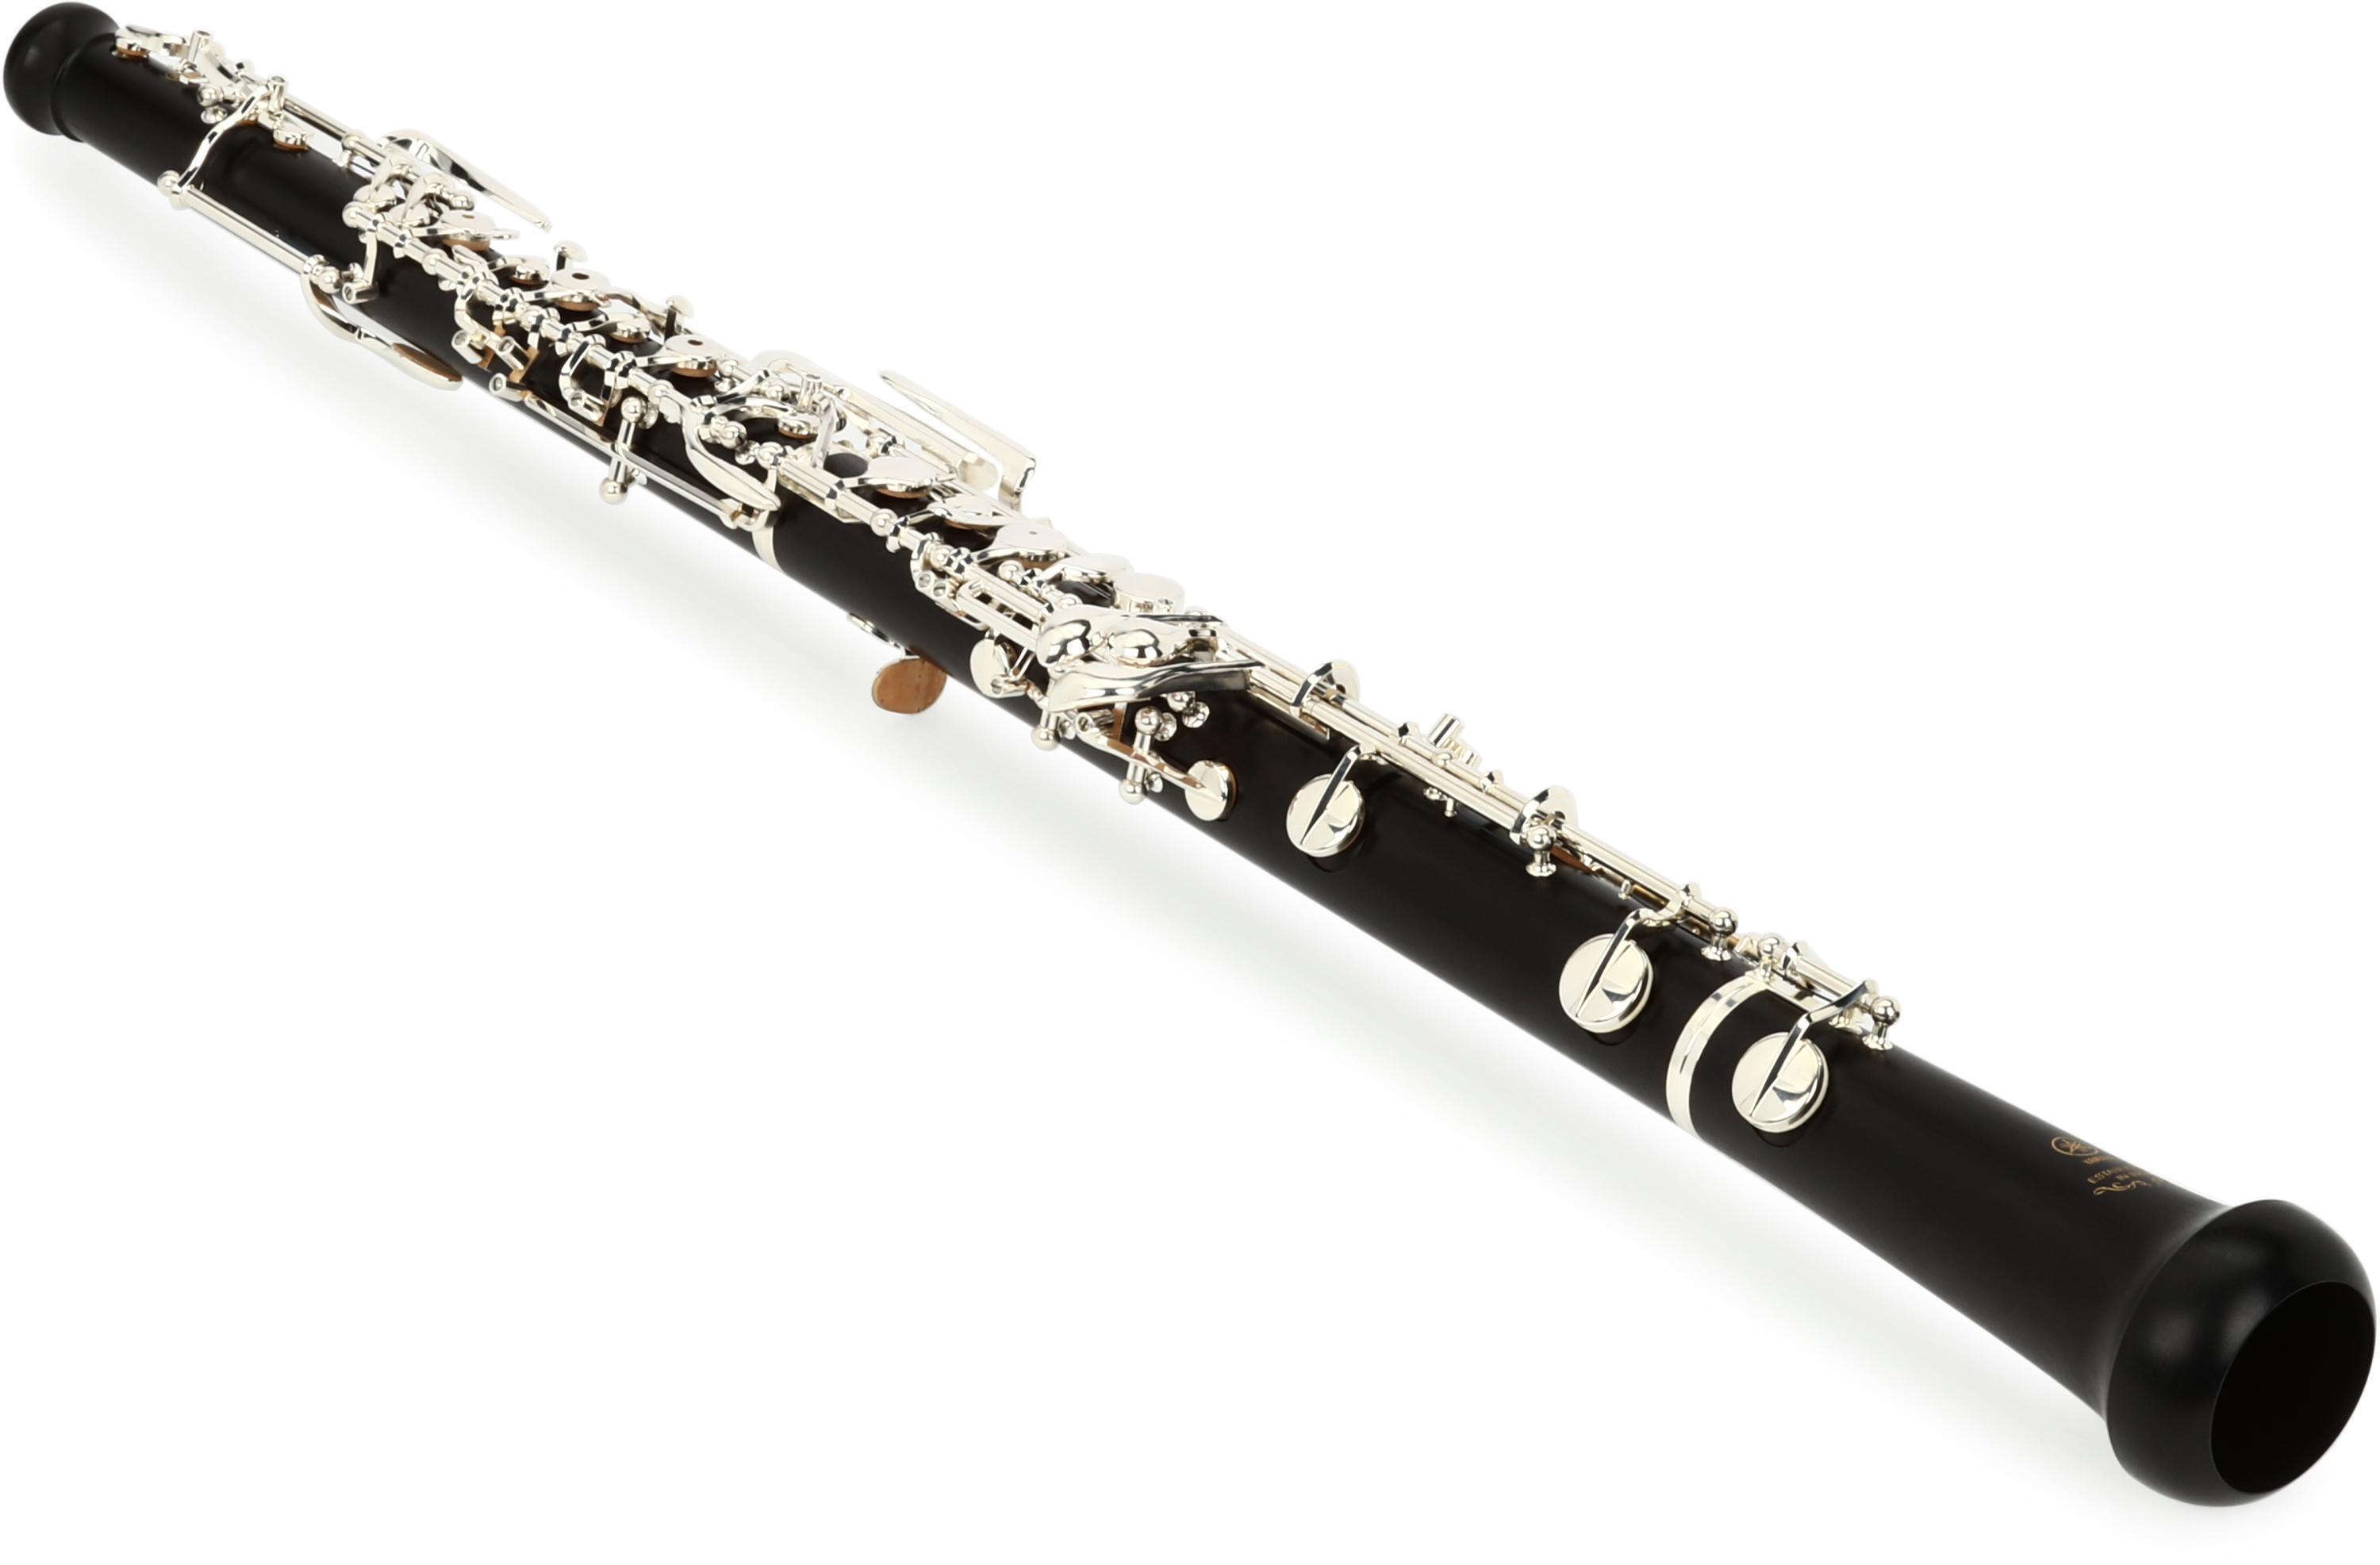 wind instruments oboe